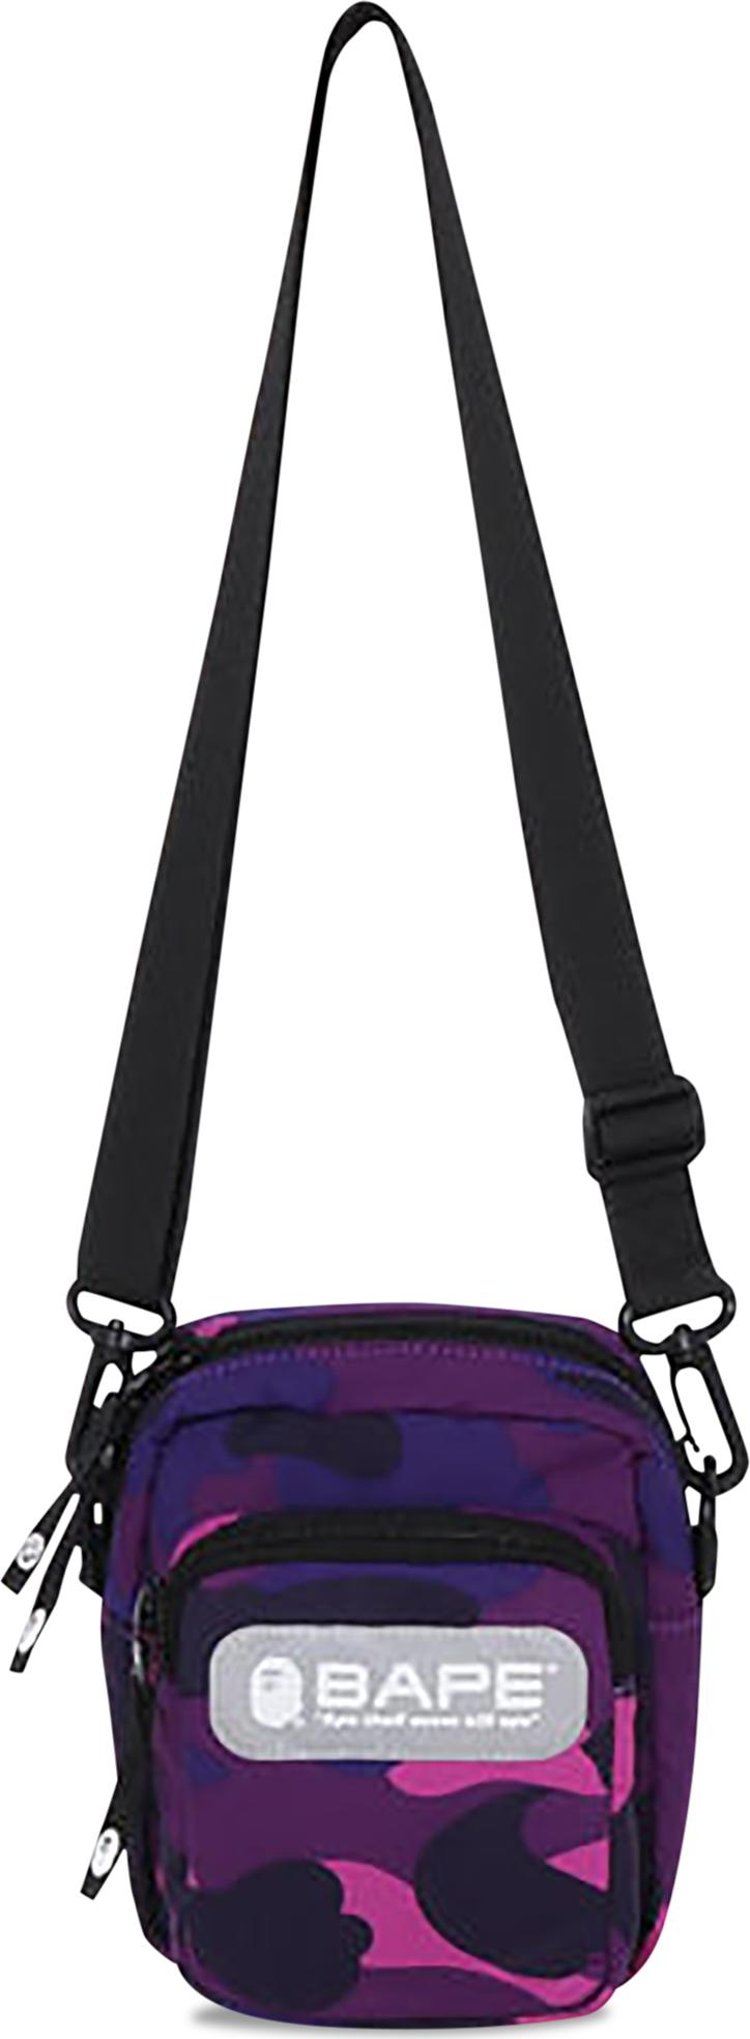 Bape Draw String Bag, Purple Bape String Bag